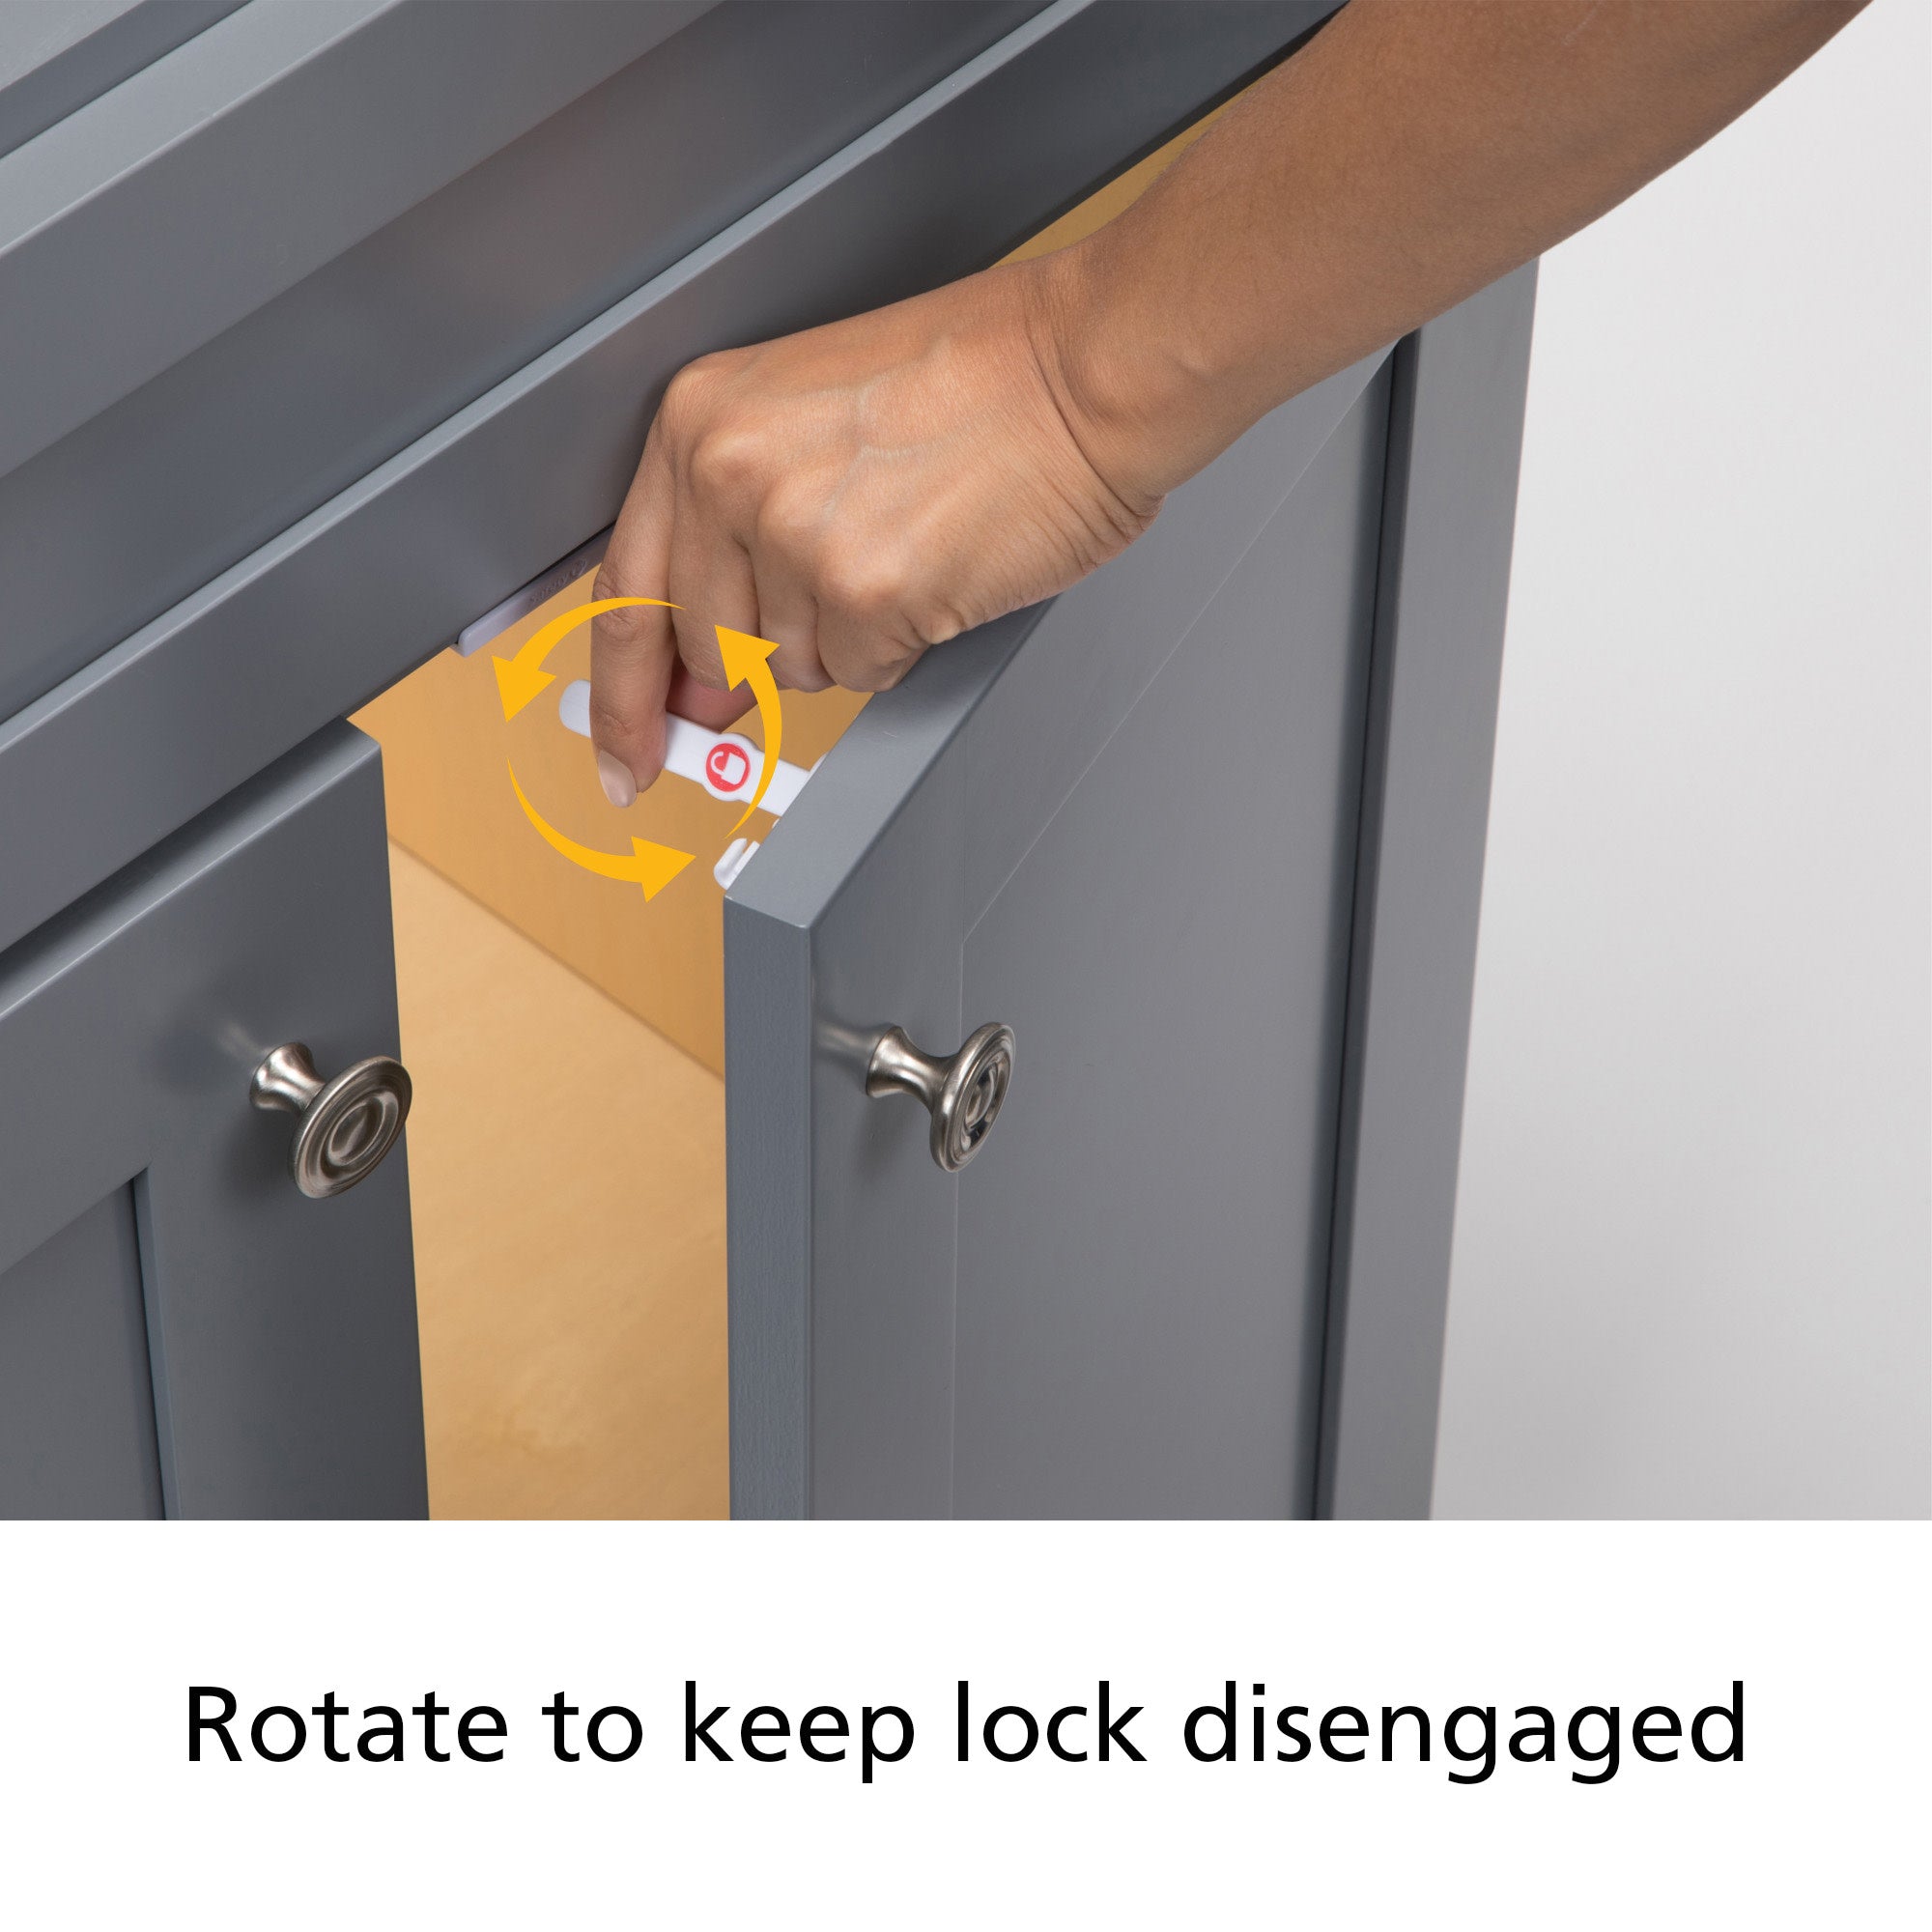 No Tools Kitchen Safety Kit - rotate to keep lock disengaged